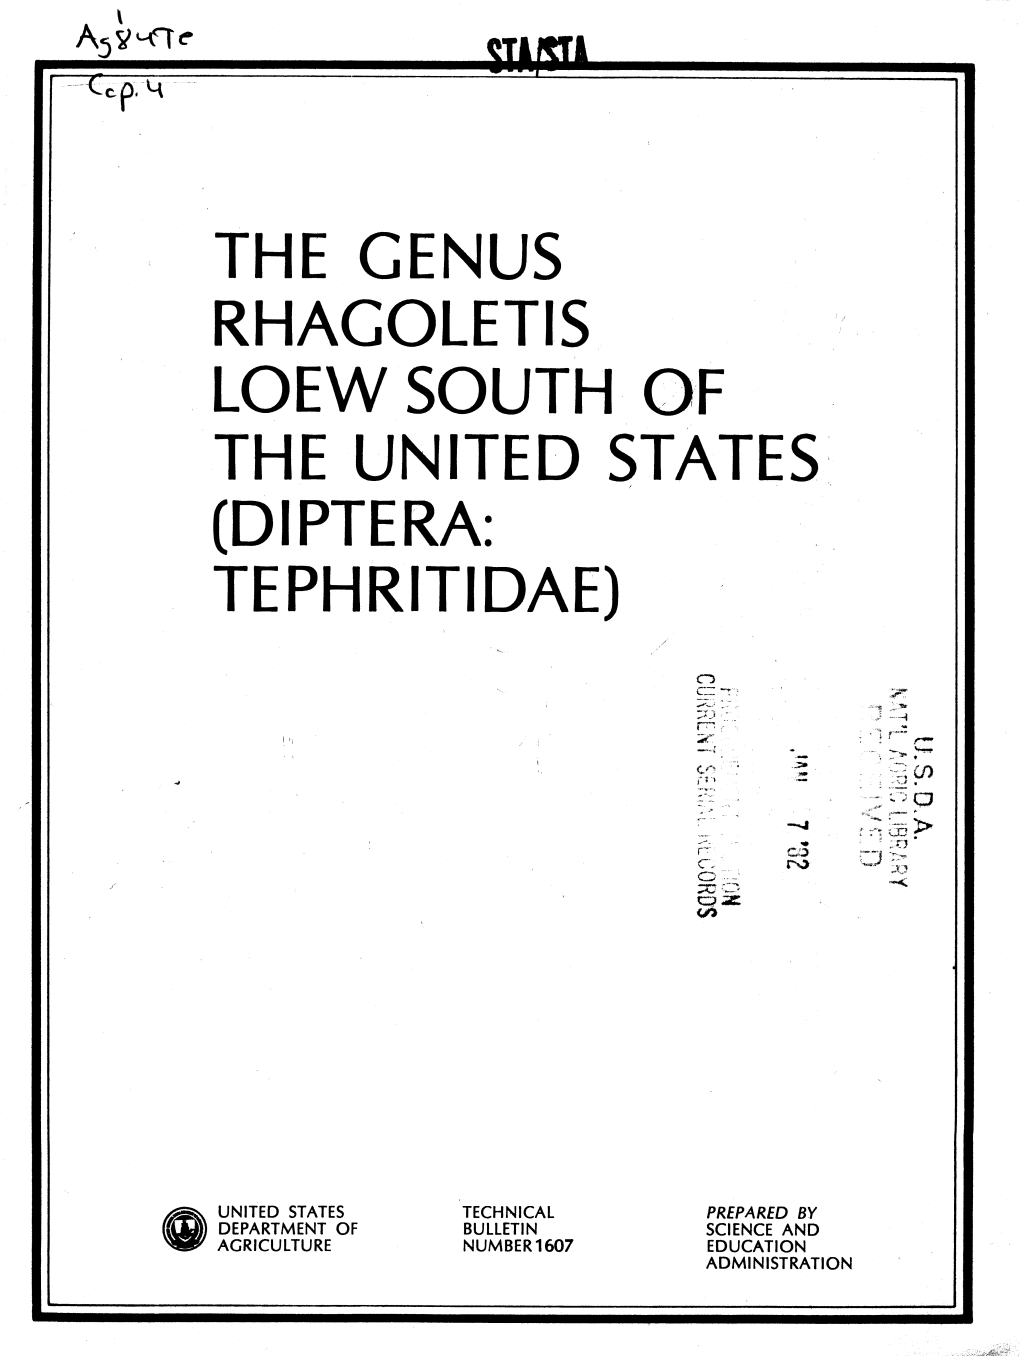 The Genus Rhagoletis Loew South of the United States (Díptera: Tephritidae)